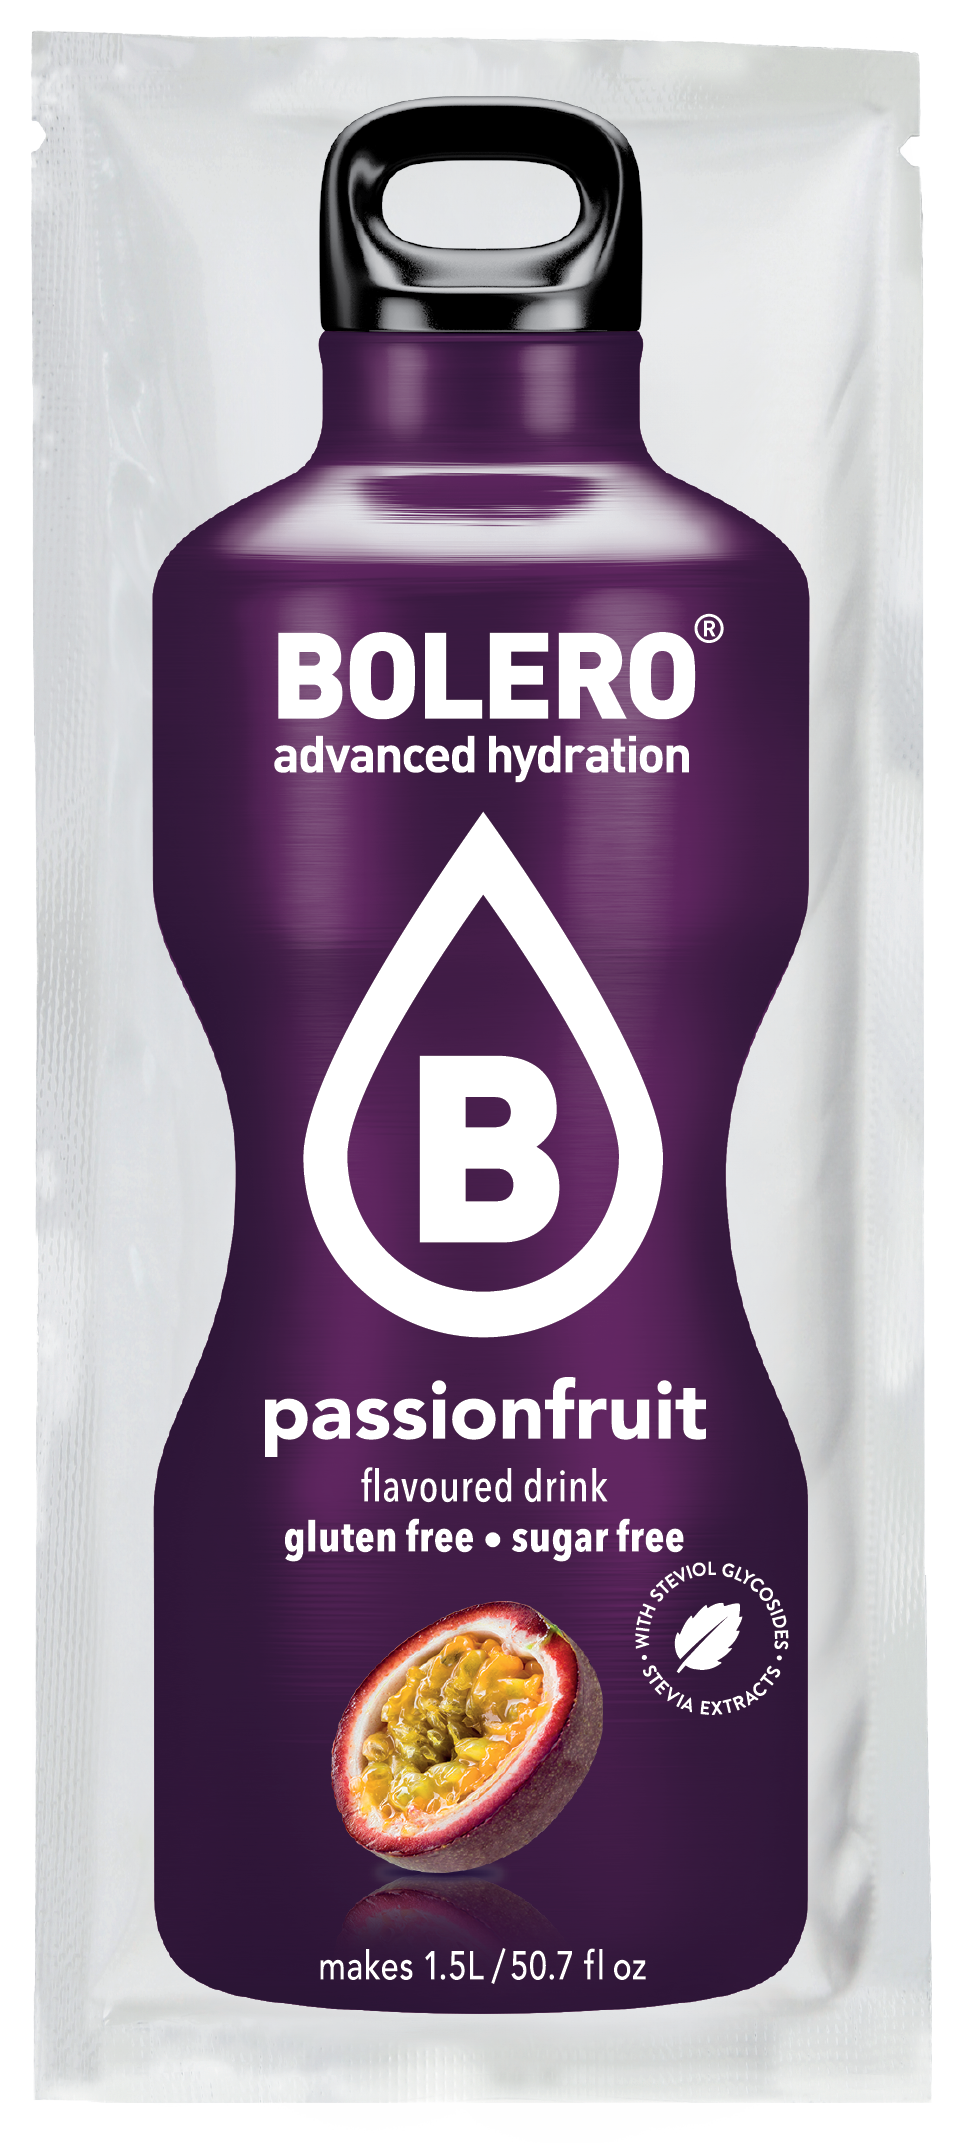 Bolero Advanced Hydration - Passionfruit - Single Sachet